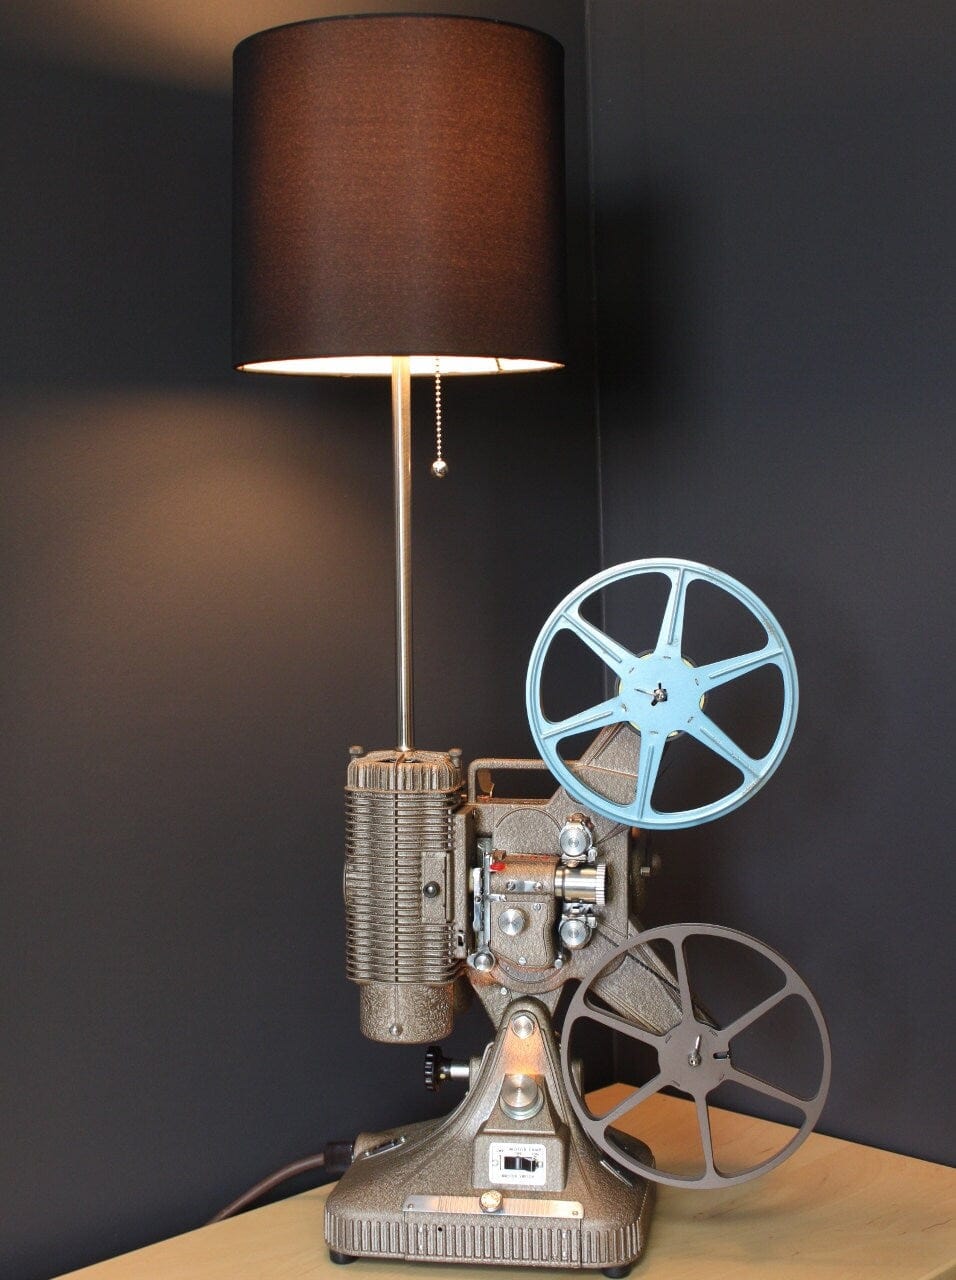 LightAndTimeArt Projector Lamp Vintage Table Lamp / Desk Lamp - Keystone Regal 8MM Projector - Hollywood & Movie Theater décor - Film Art